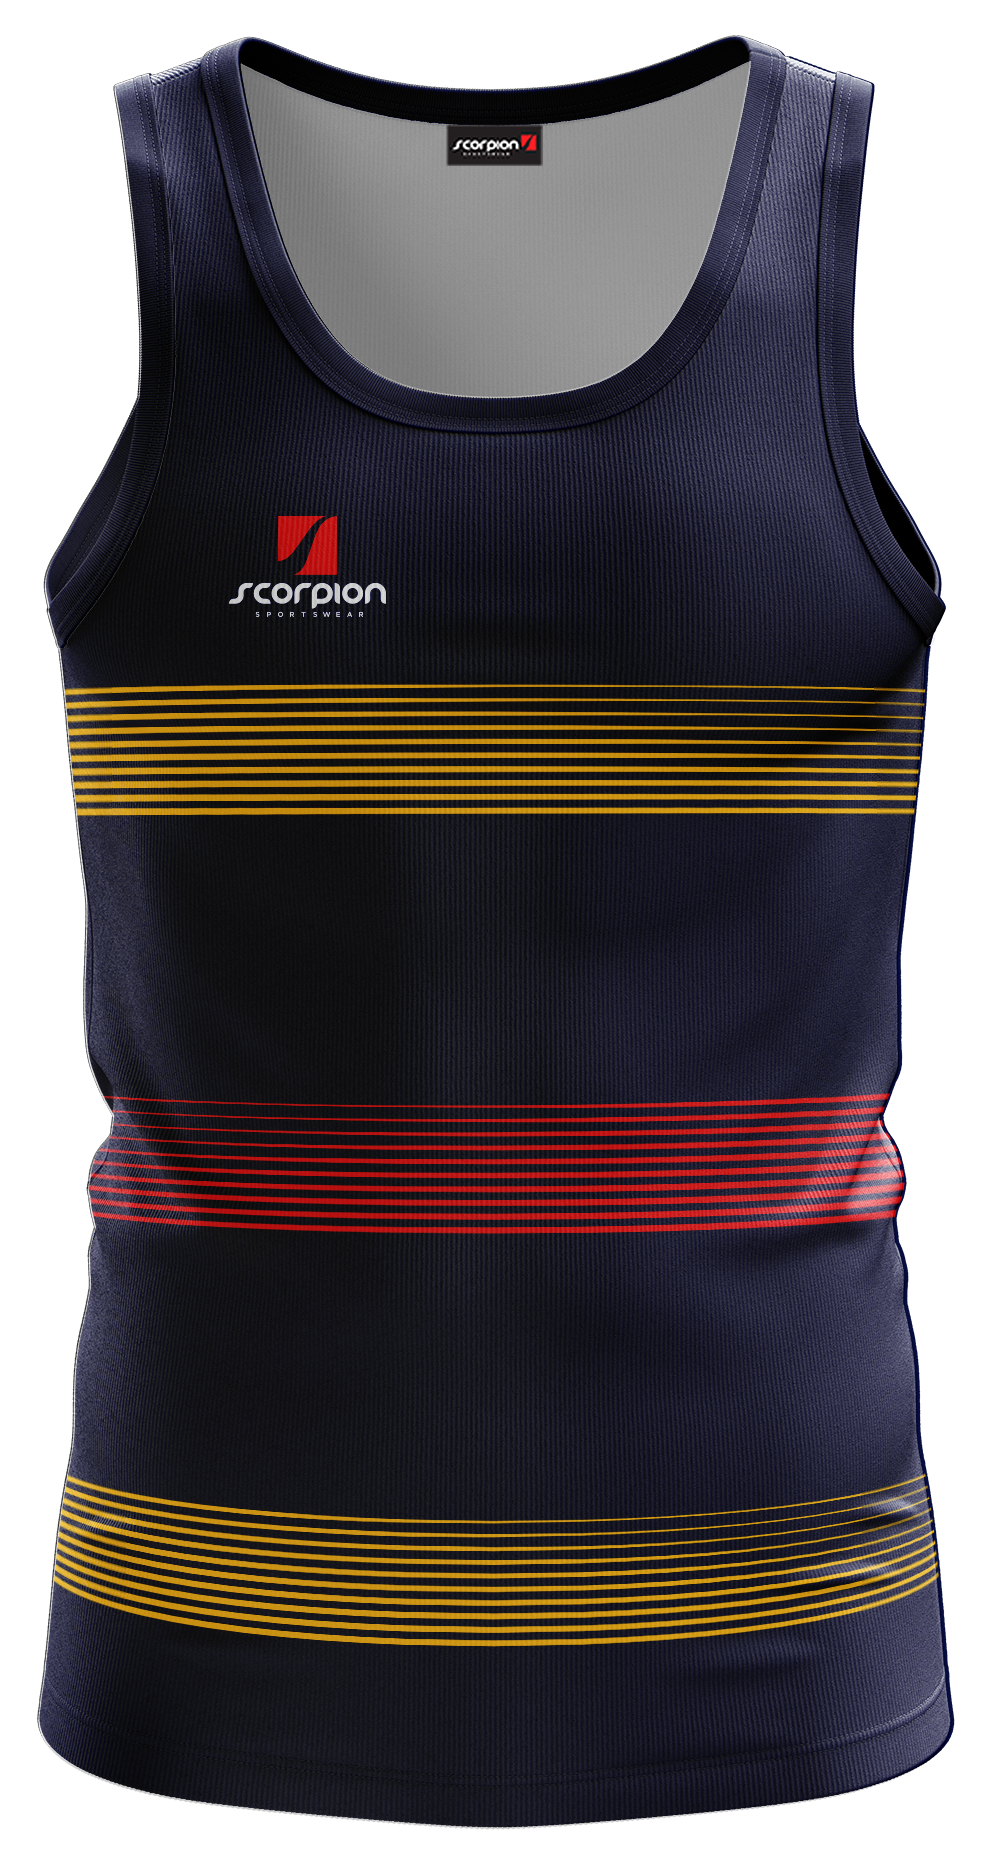 Scorpion Vests Pattern 2 - Navy/Amber/Red